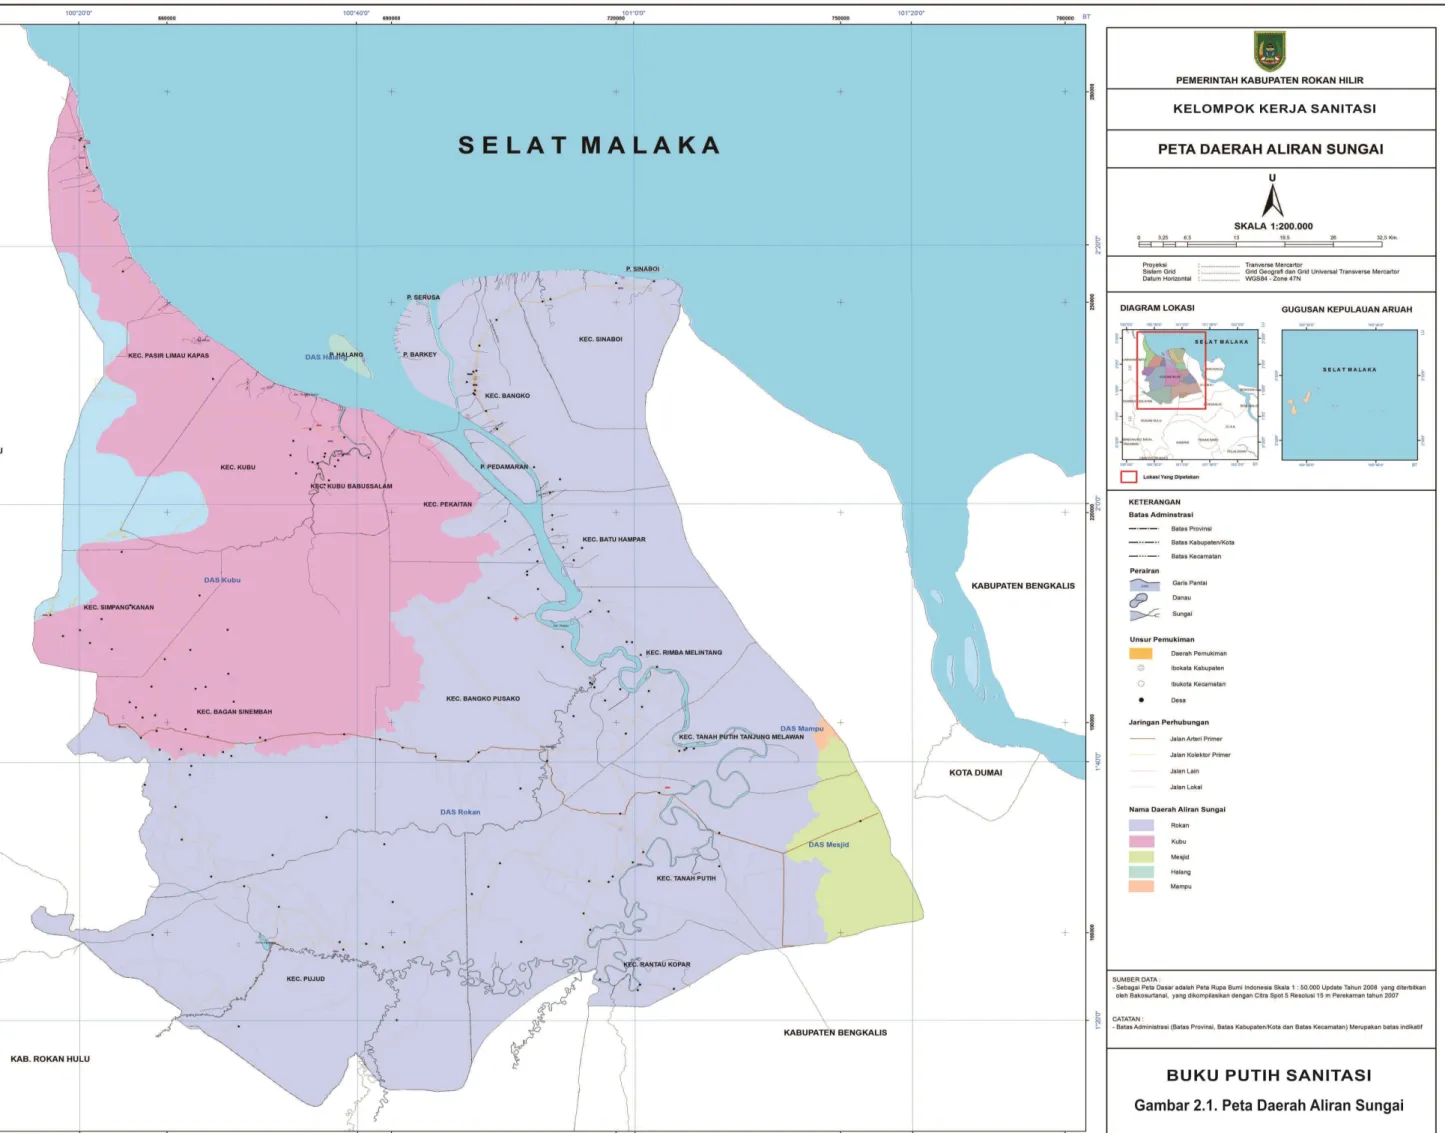 Gambar 2.1. Peta Daerah Aliran Sungai (DAS) di Kabupaten Rokan Hilir 